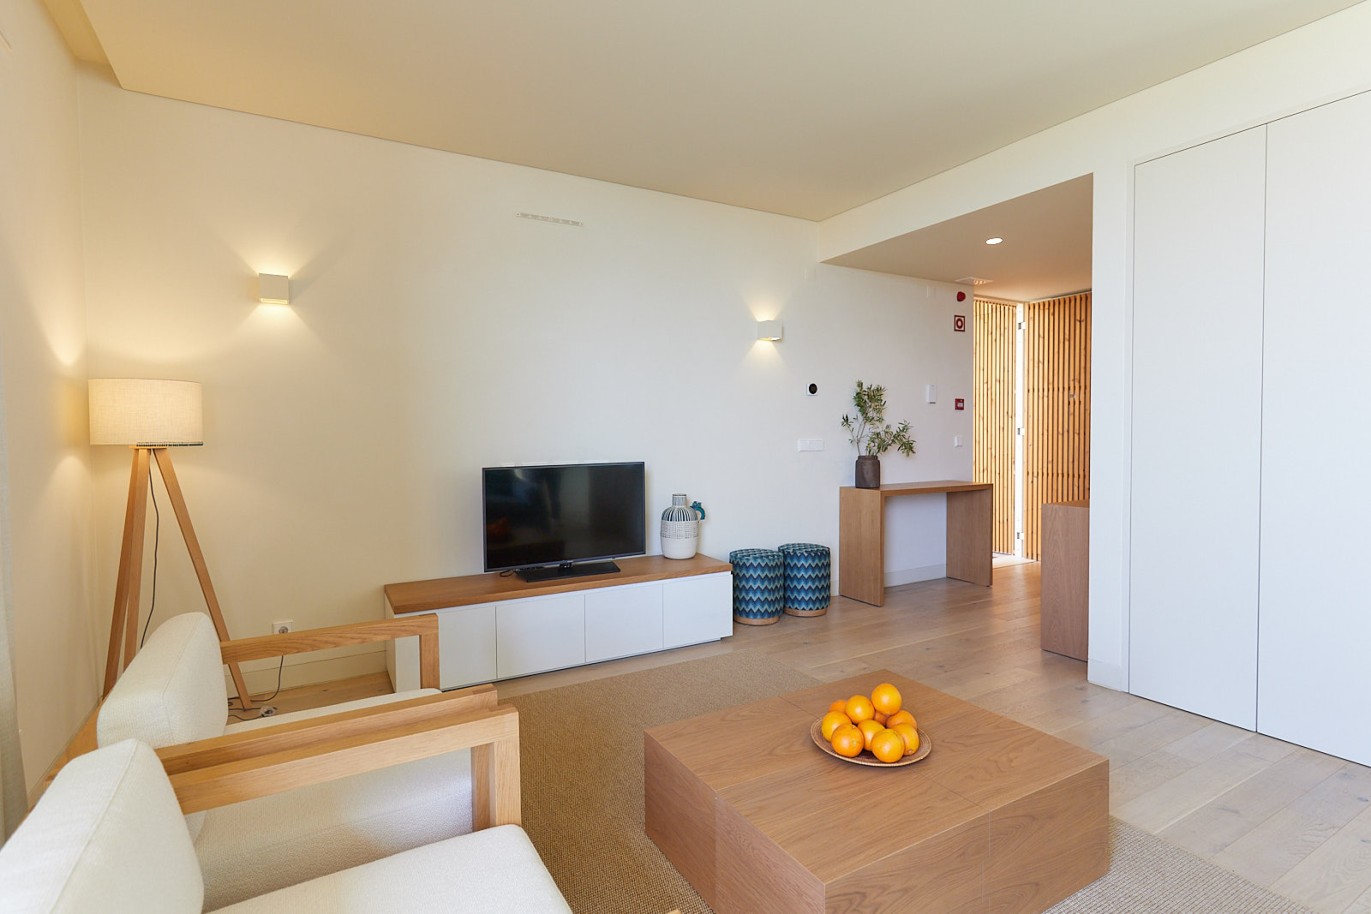 3 bedroom apartment in resort, for sale in Porches, Algarve_228608